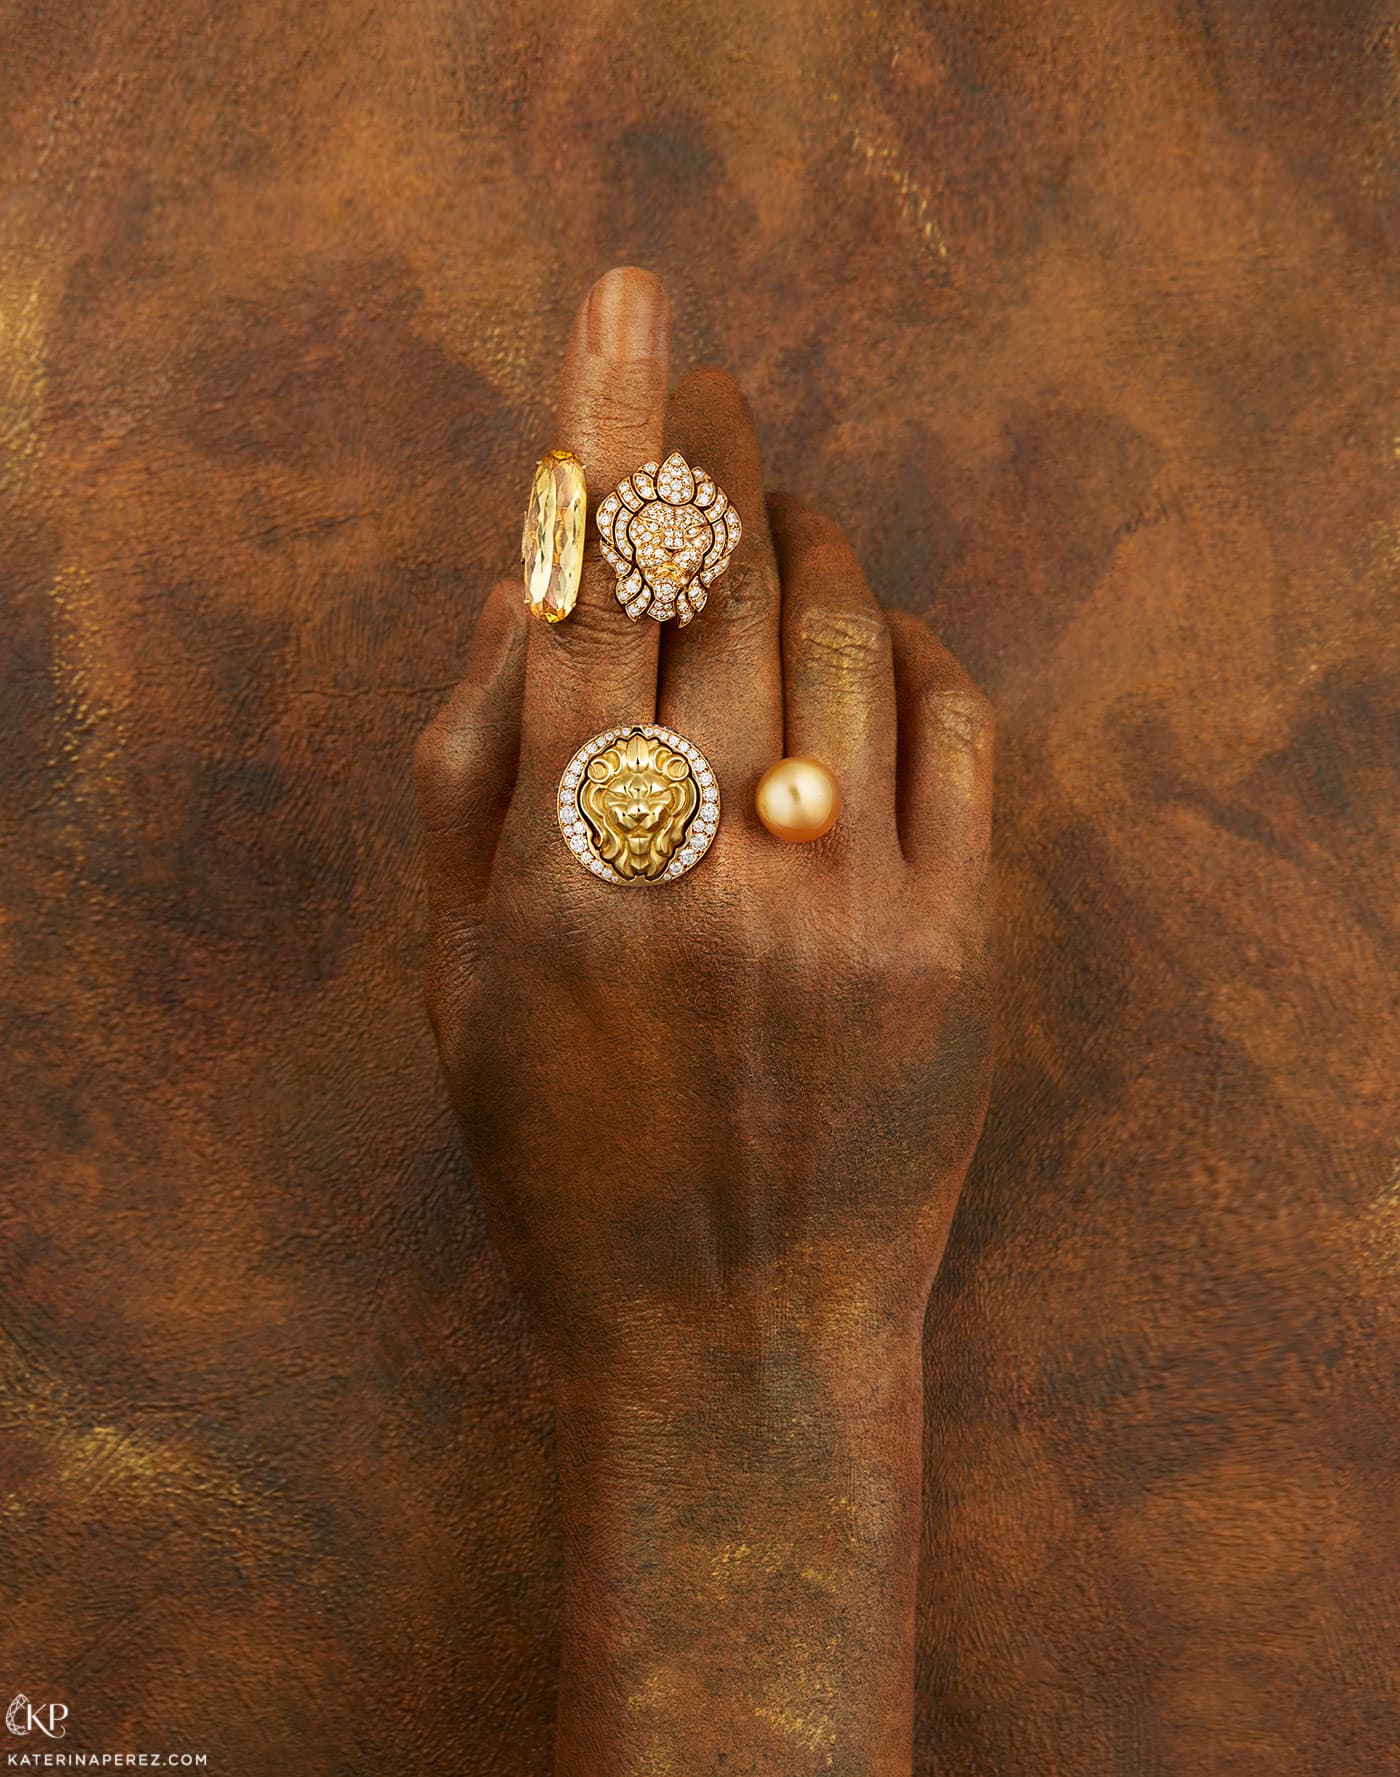 Chanel L'Esprit du Lion ring with oval yellow beryl and diamonds paire with Sous le Signe du Lion ring with a South Sea pearl and diamonds